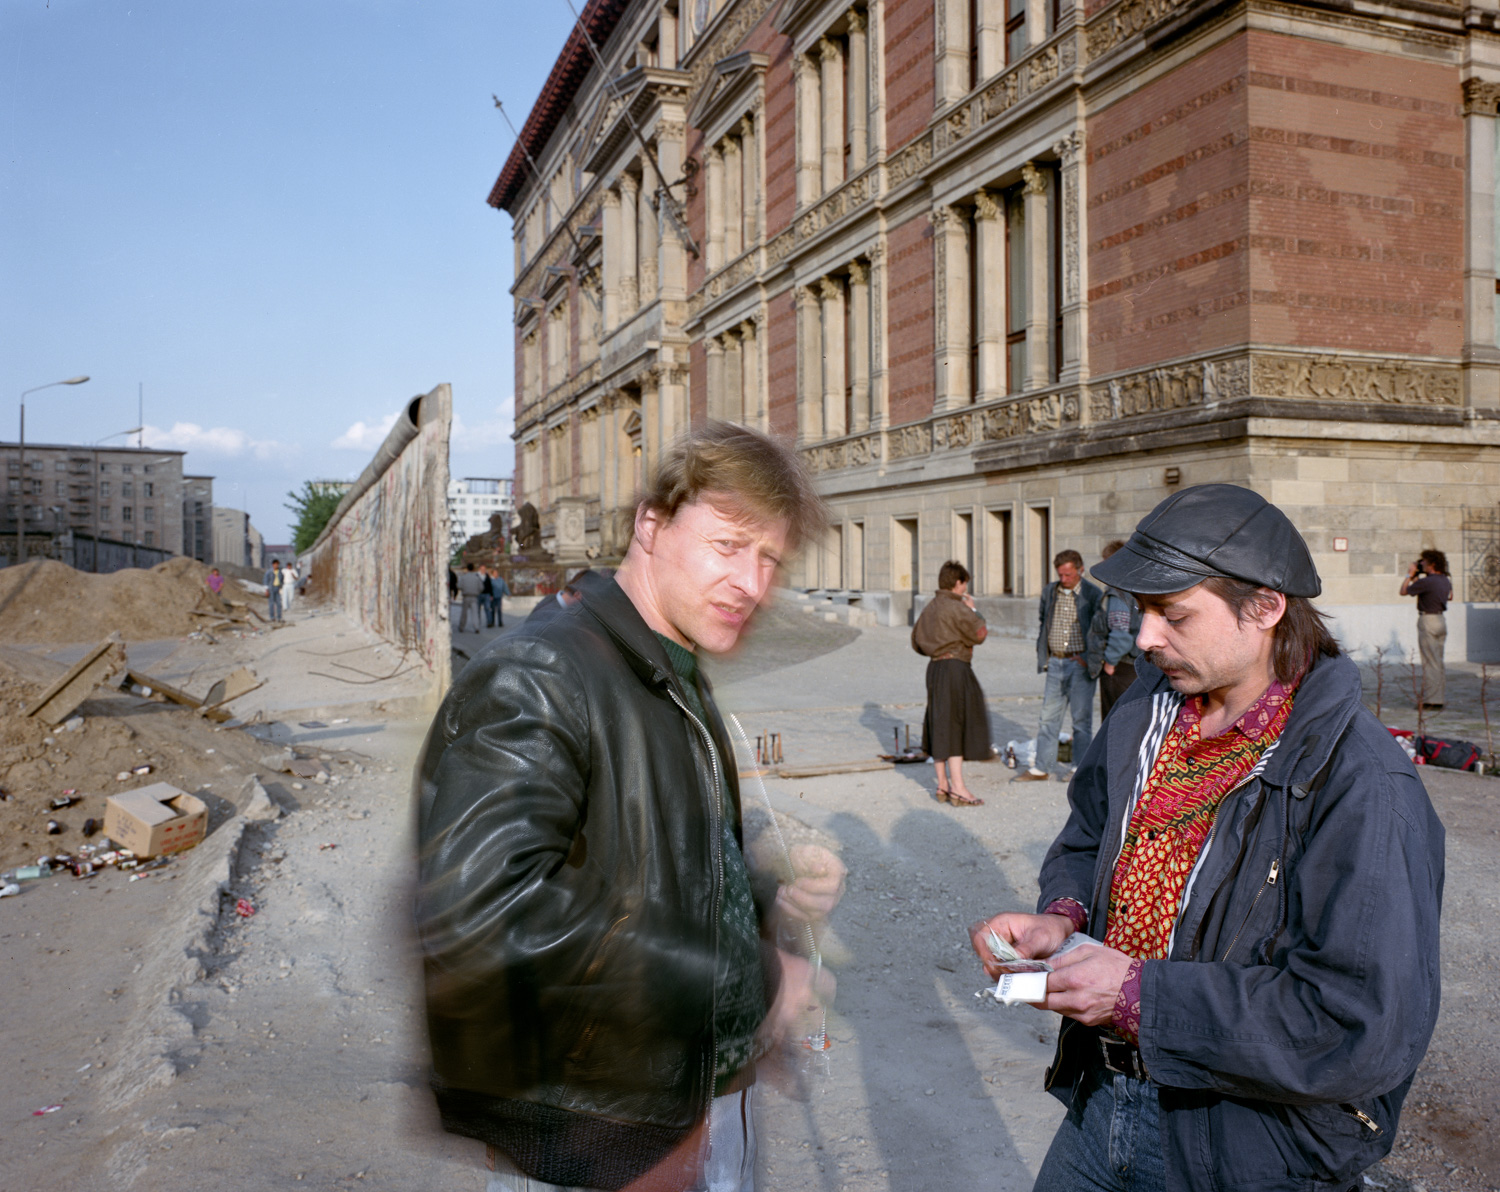    
  
 
  
    A little docudrama - two men changing money near the wall behind Martin Gropius - Bau. Berlin 1990.    
  
 Normal 
 0 
 
 
 
 
 false 
 false 
 false 
 
 EN-CA 
 X-NONE 
 X-NONE 
 
  
  
  
  
  
  
  
  
  
 
 
  
  
  
  
  
  
  
